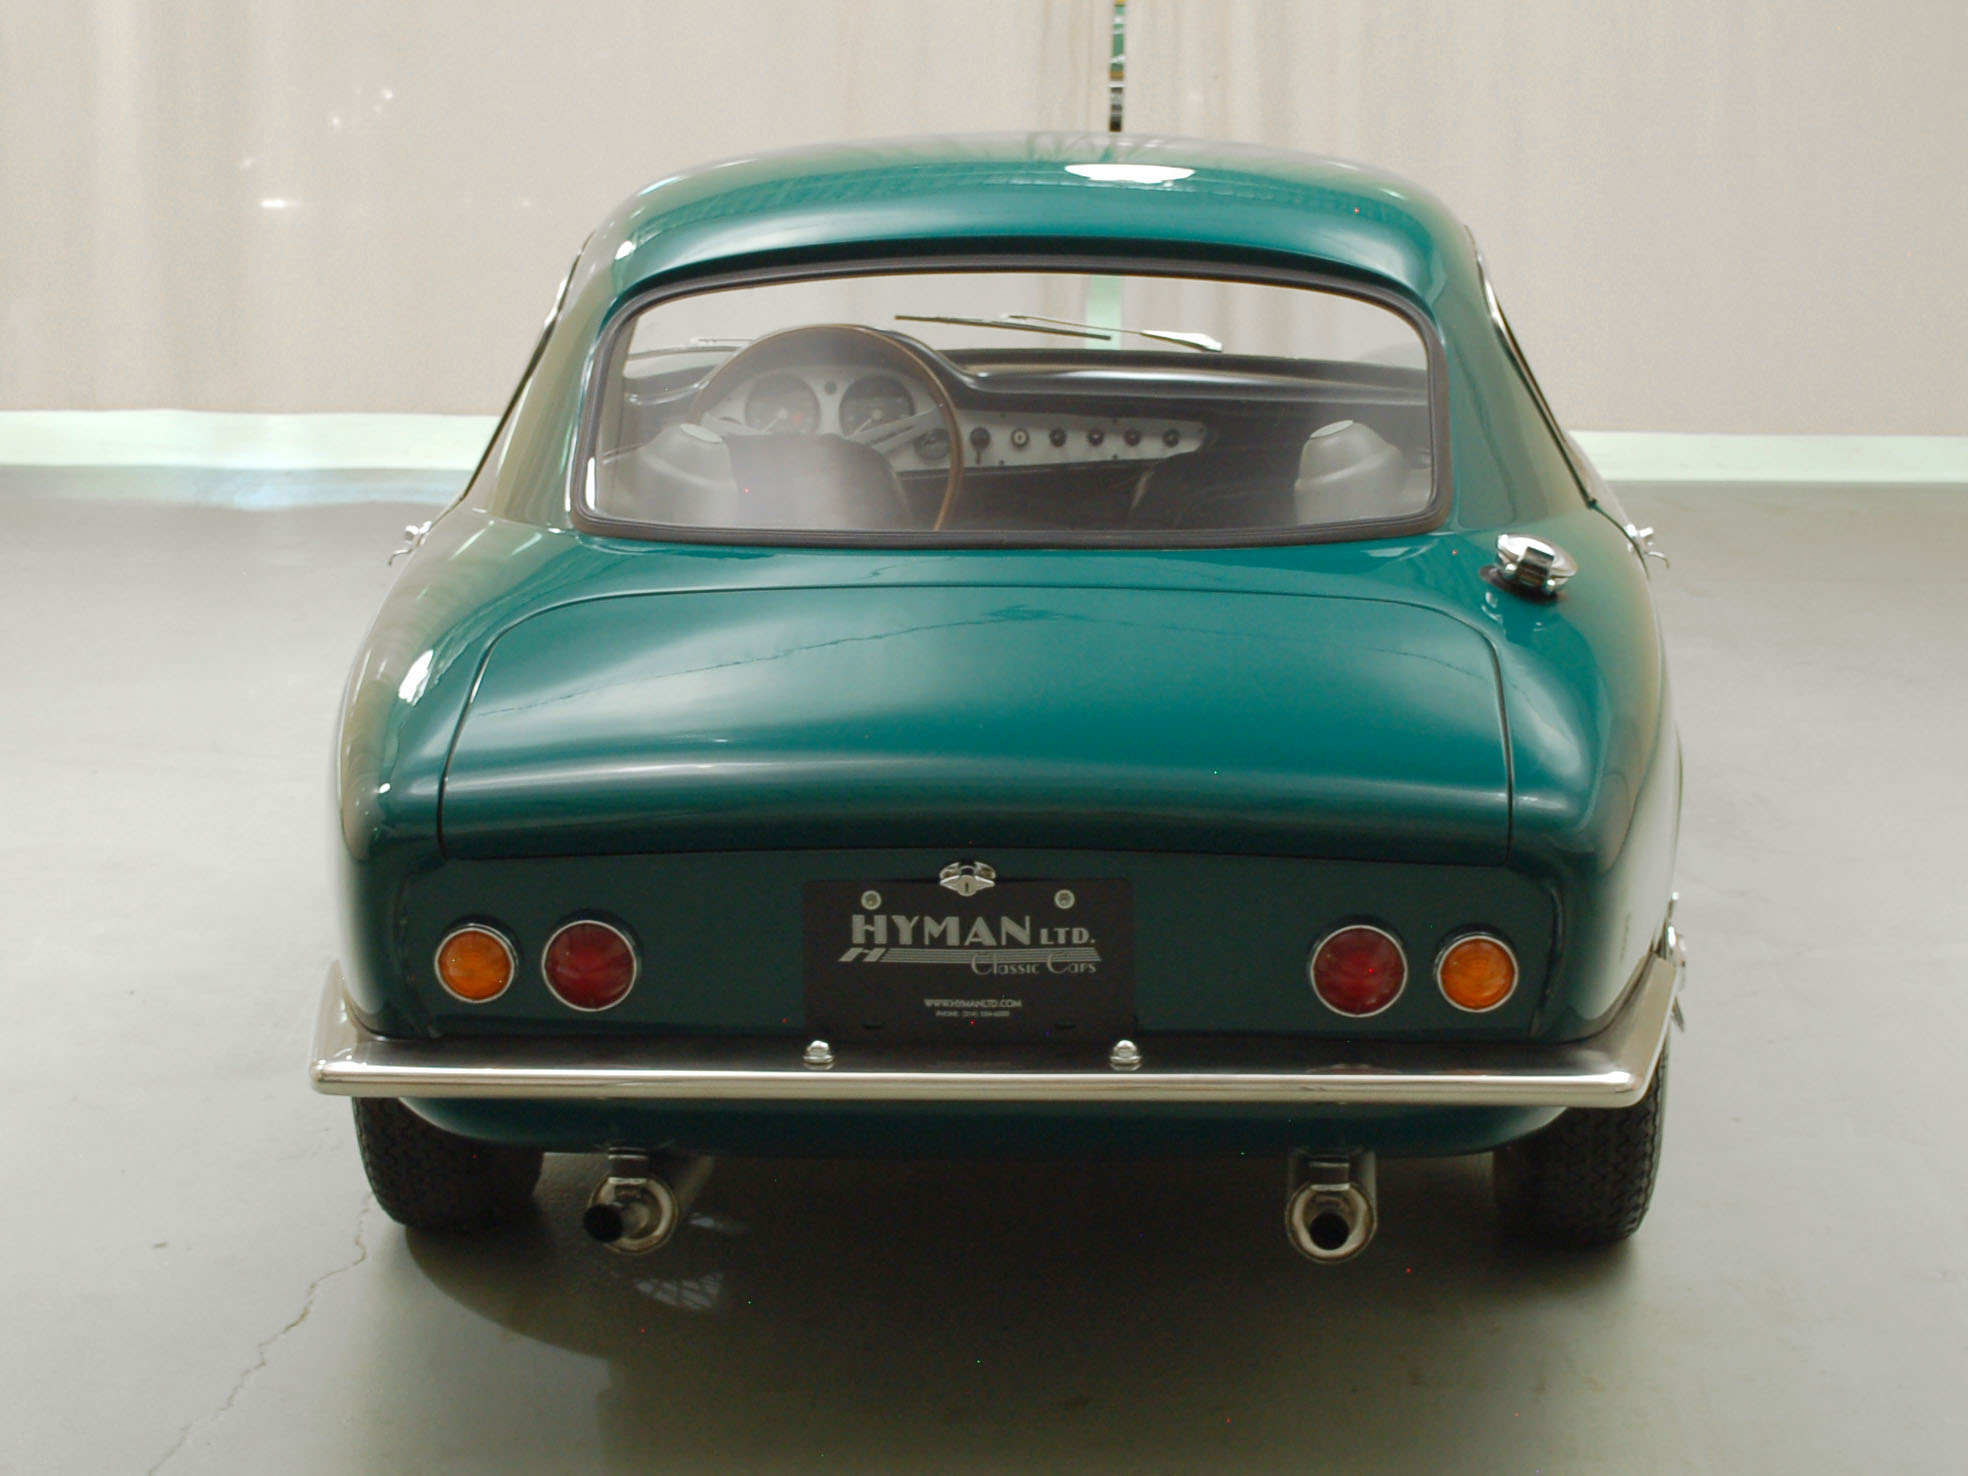 1957 Lotus Elite